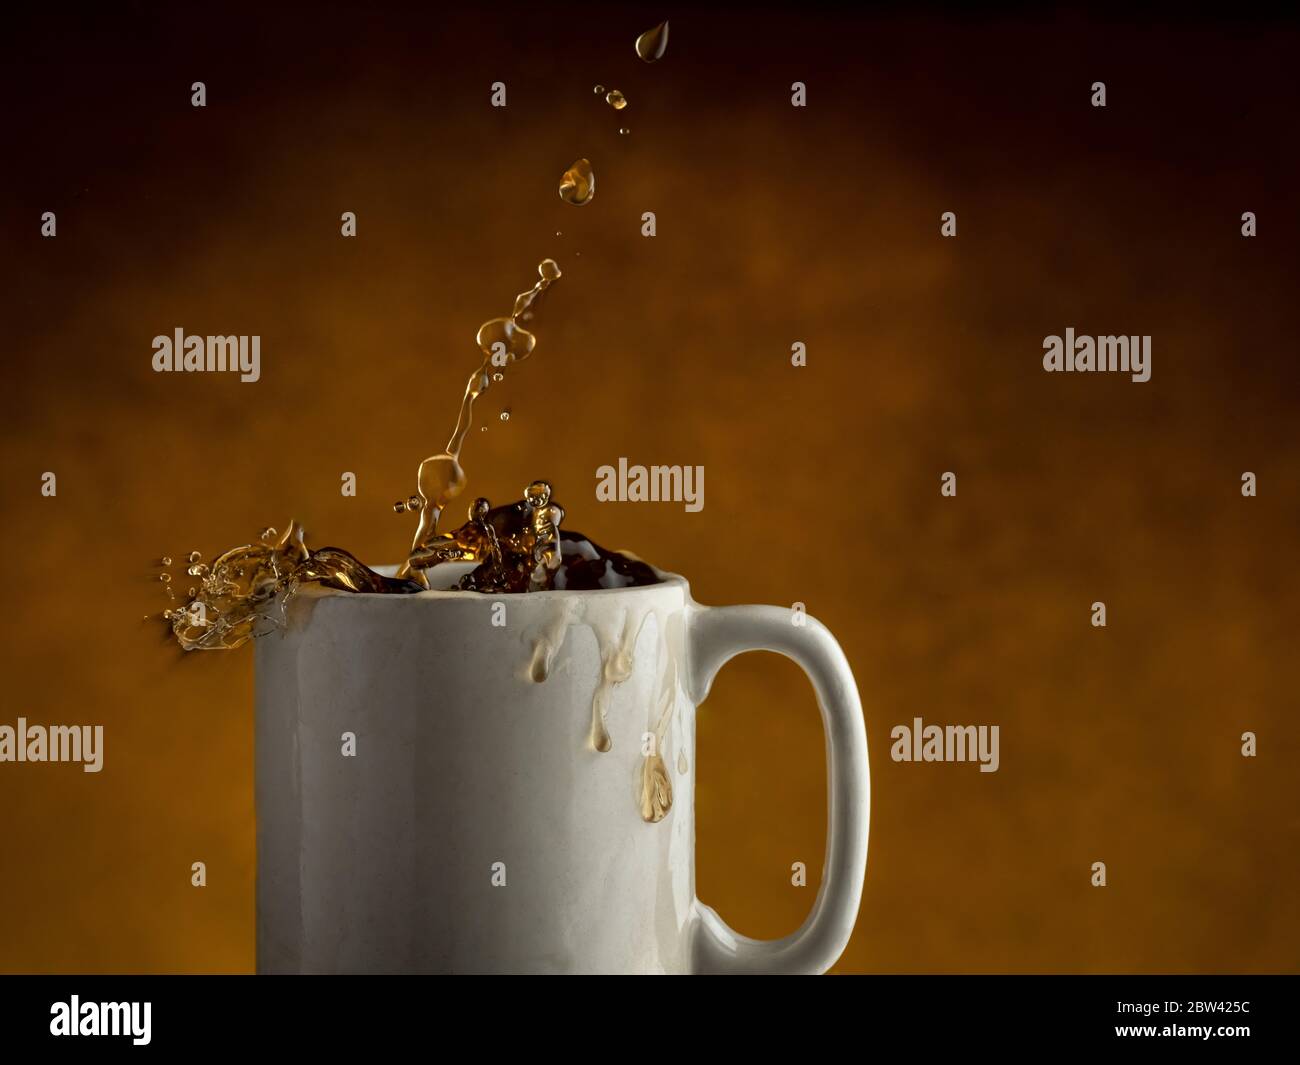 Coffee splashing out of coffee mug Stock Photo